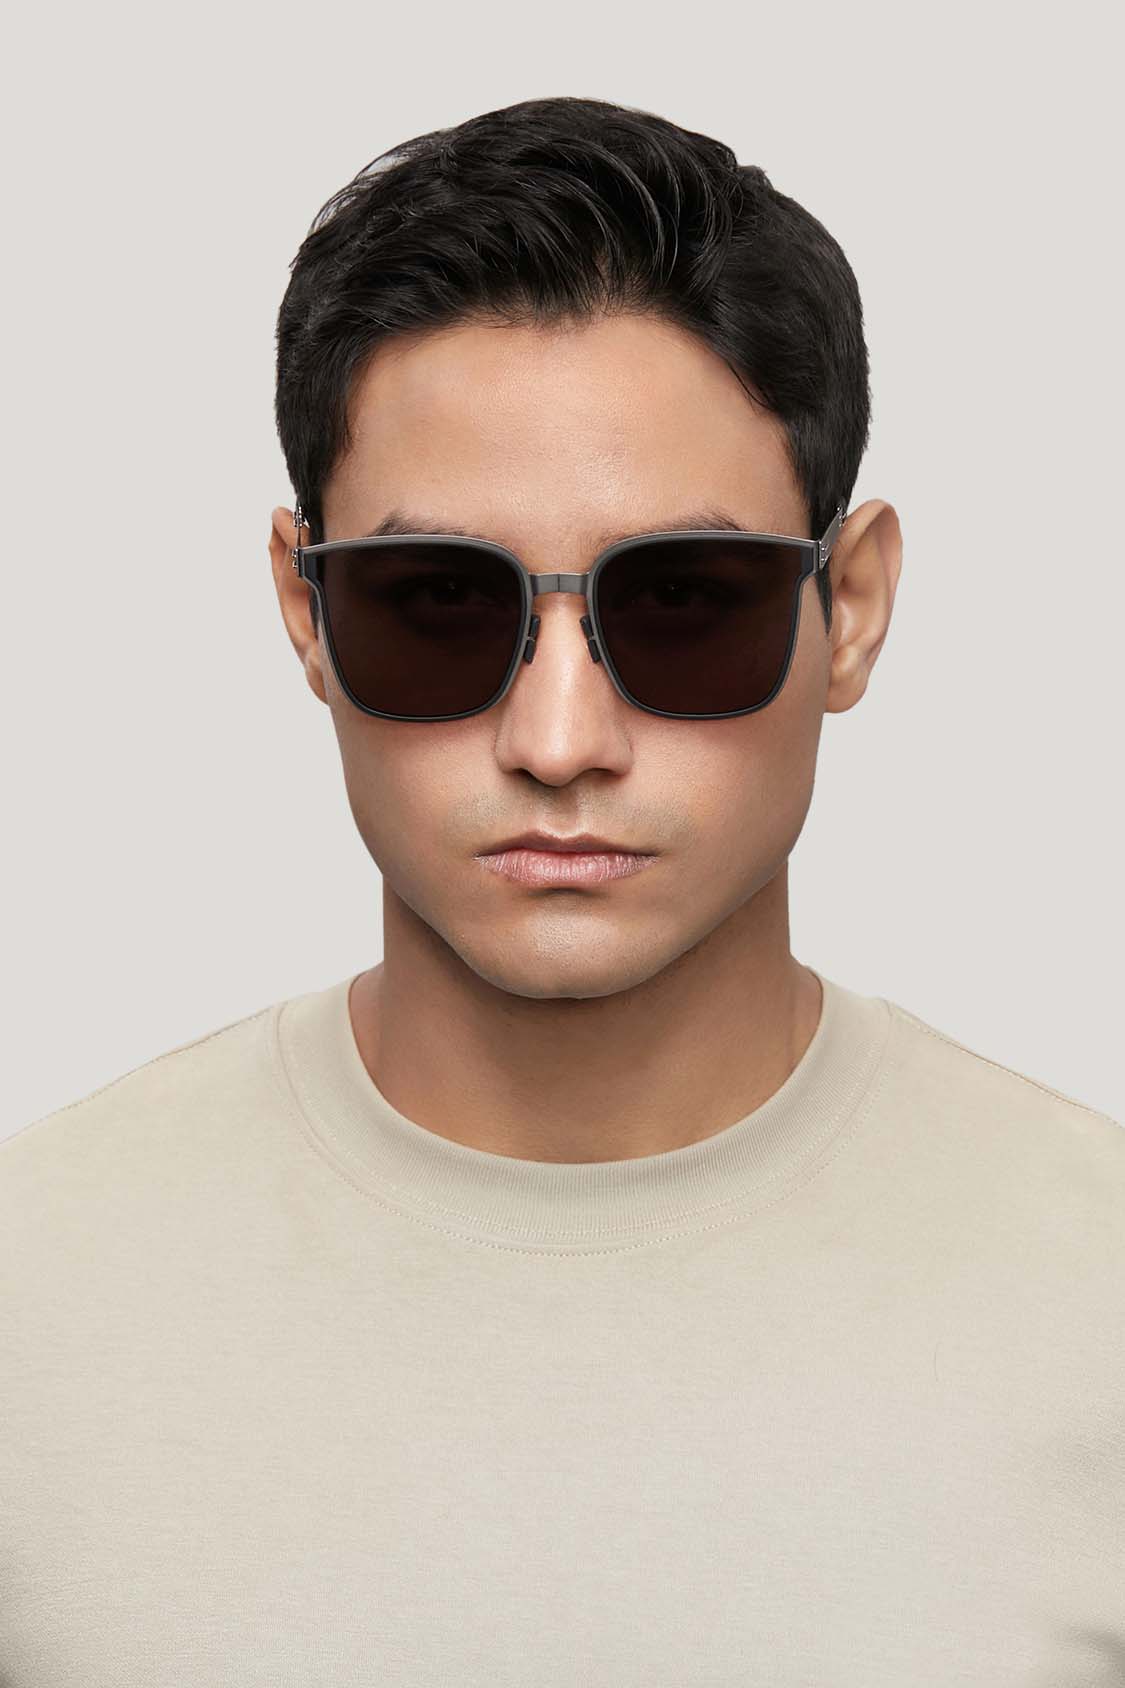 beneunder men's slimline polarized folding sunglasses shades #color_sand gray